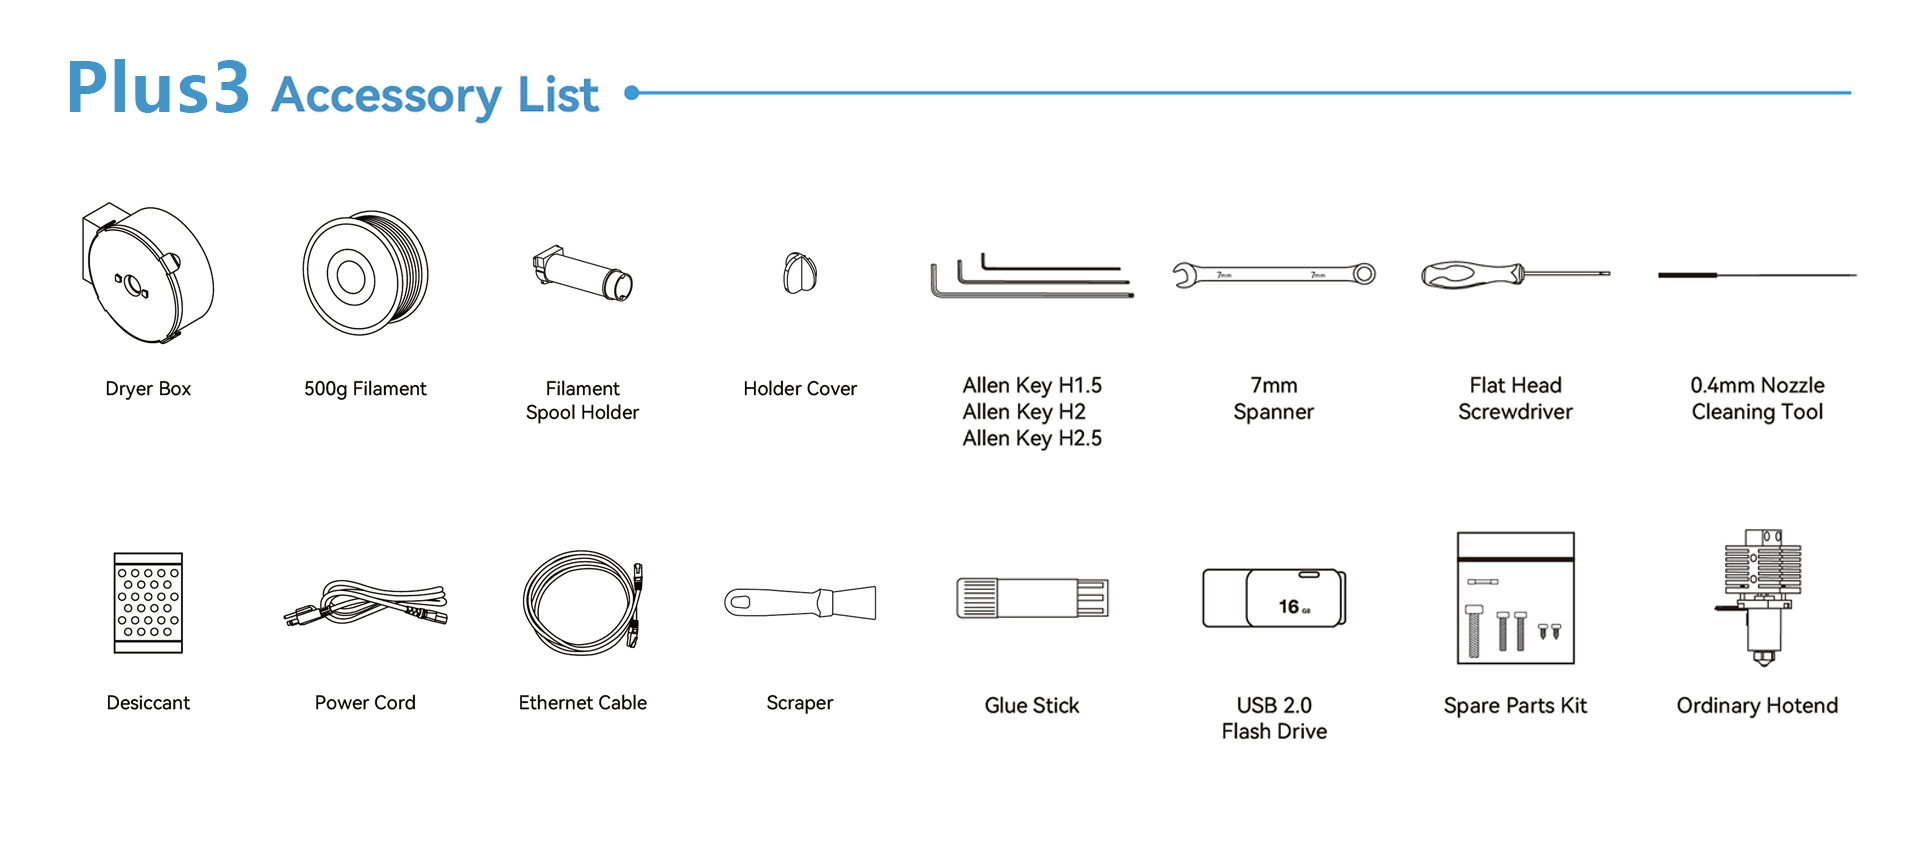 PLUS3-List of accessories